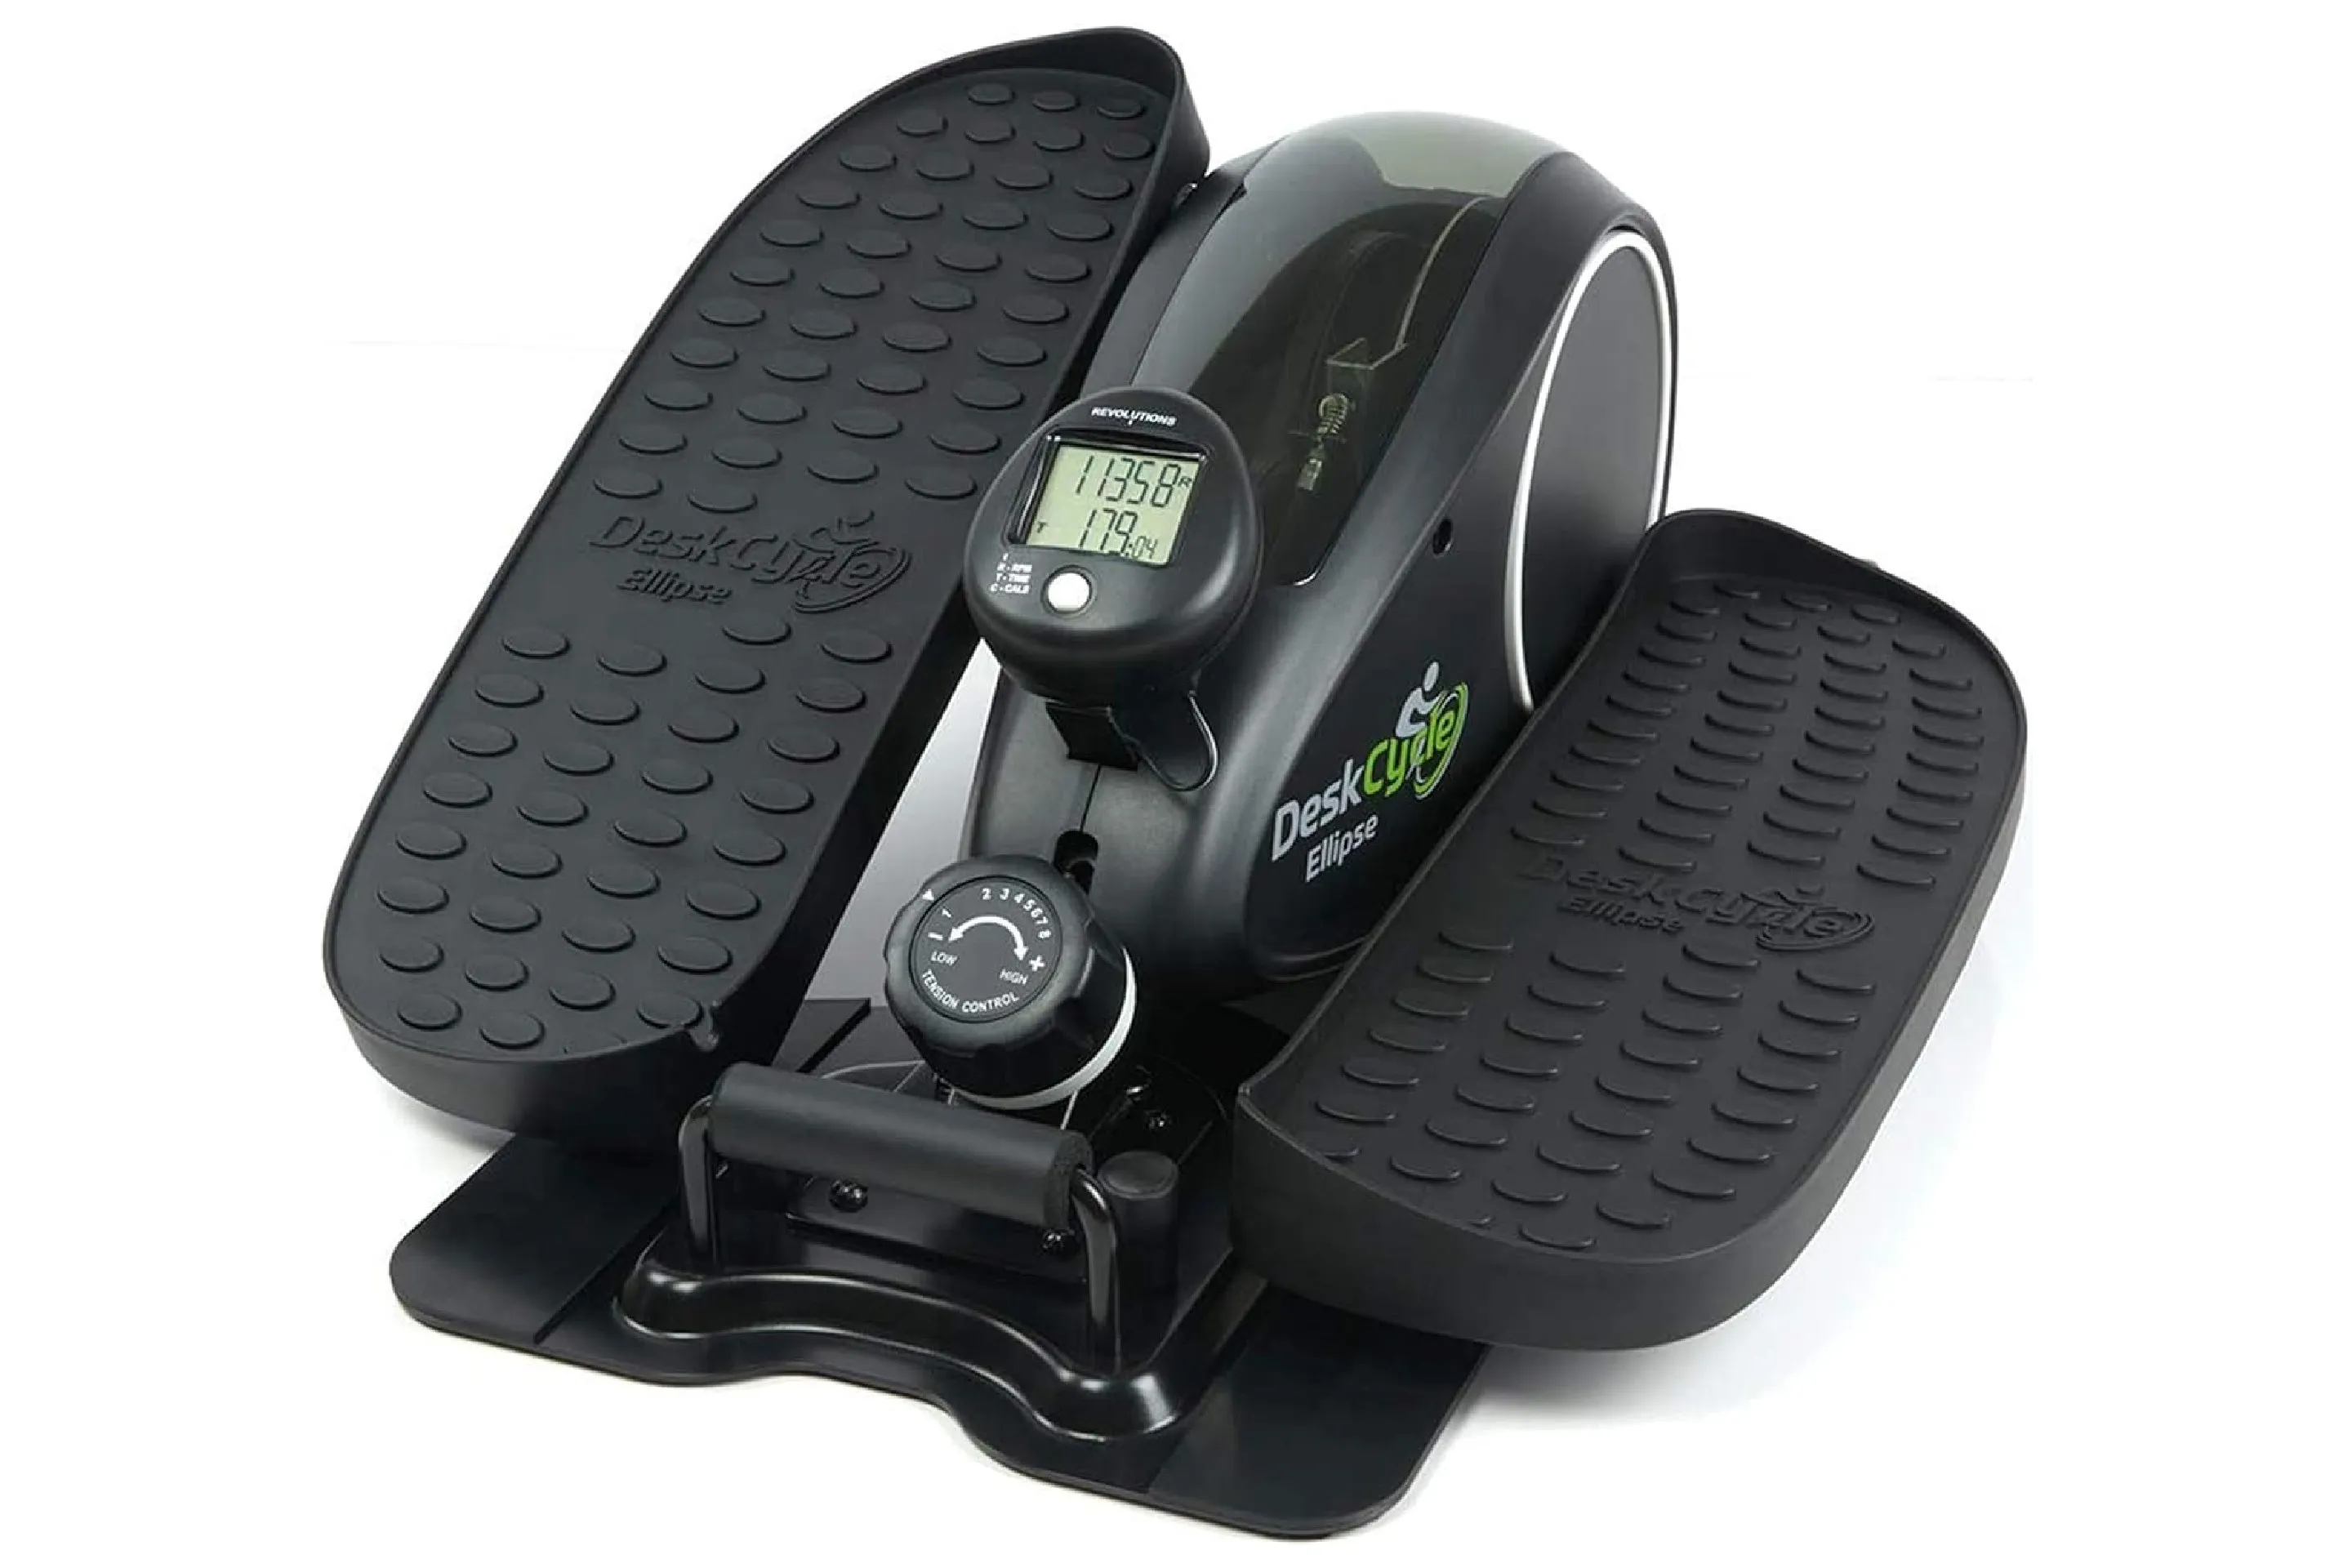 Cubii Move - Under Desk Elliptical Bike Pedal Exerciser Portable Seated Elliptical Machine w/ Adjustable Workout Levels, Size: One Size